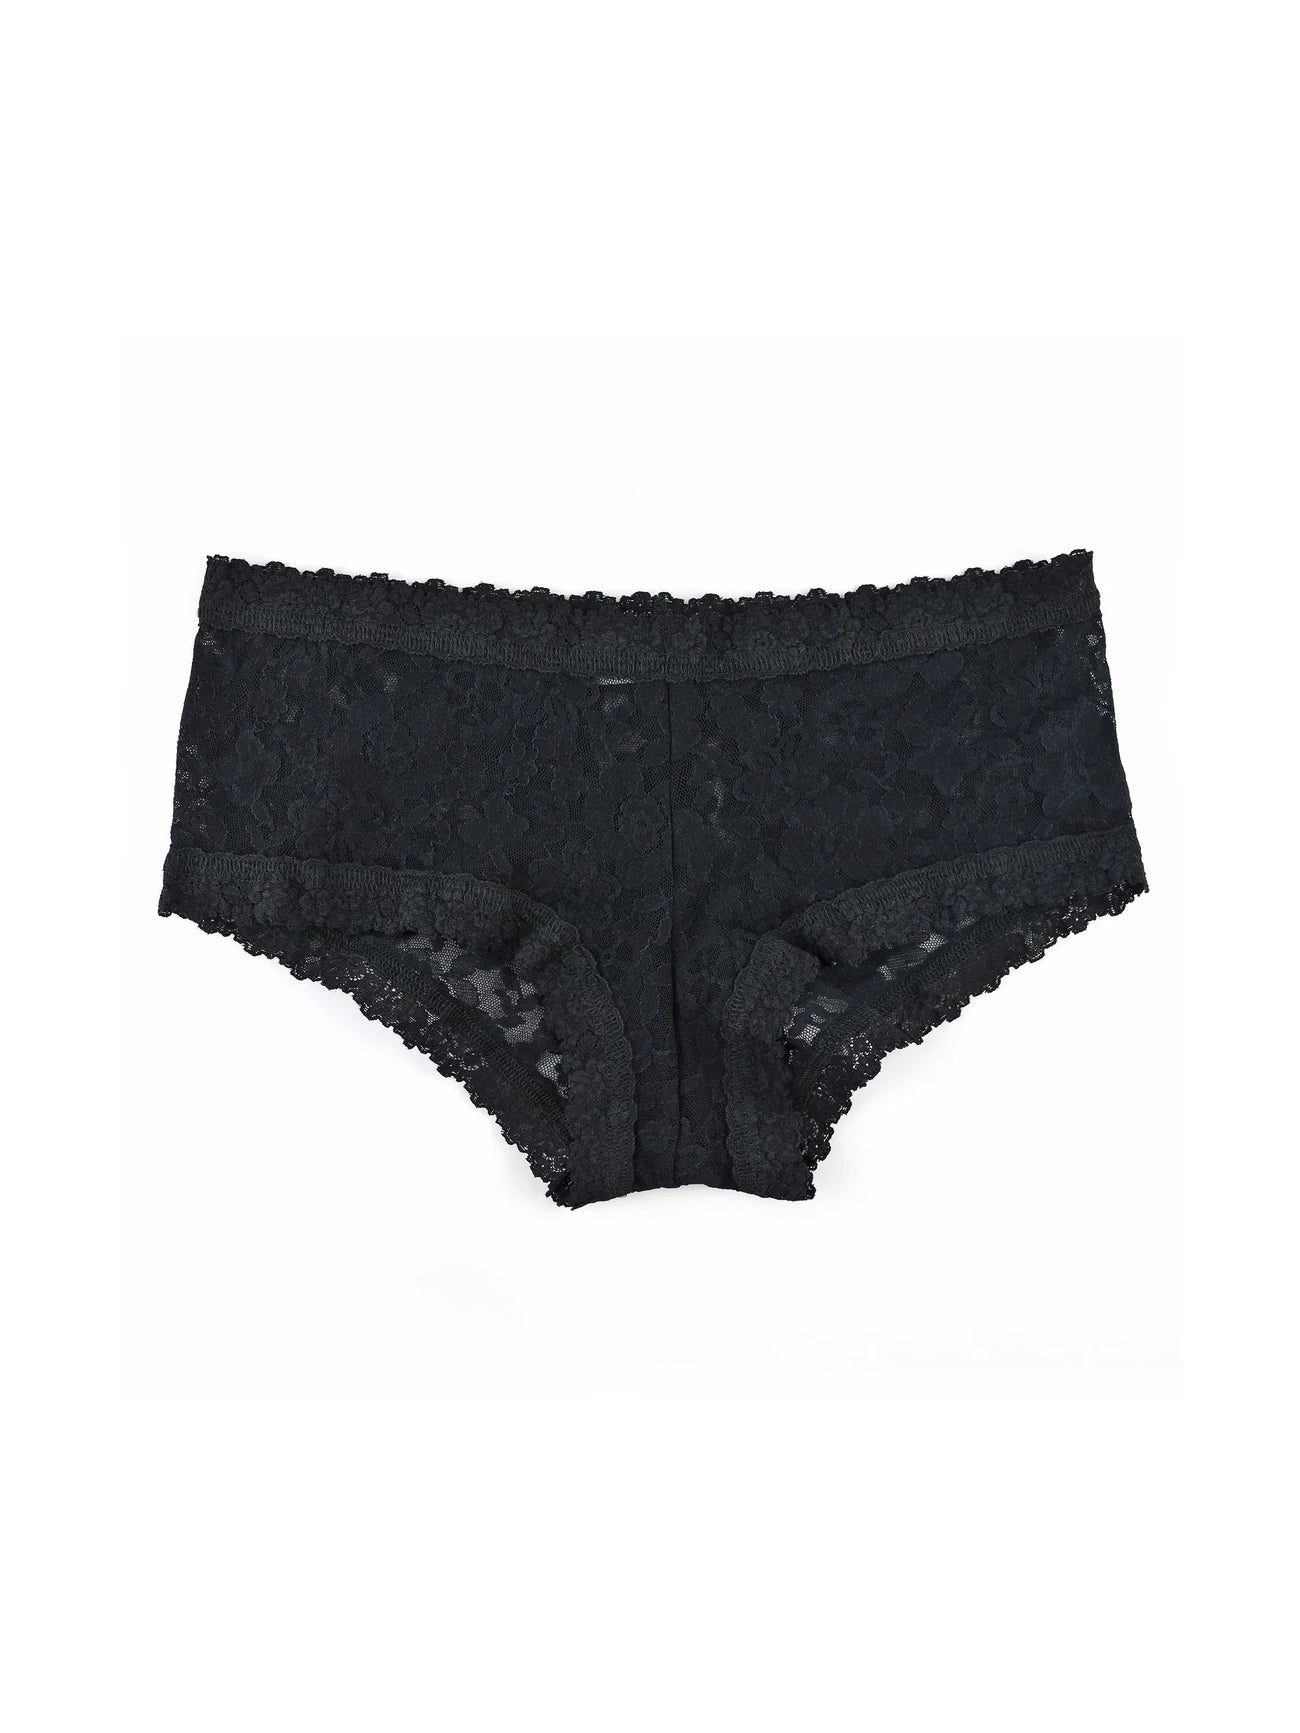 Lace Boyshort Underwear Hanky Panky Black XS 